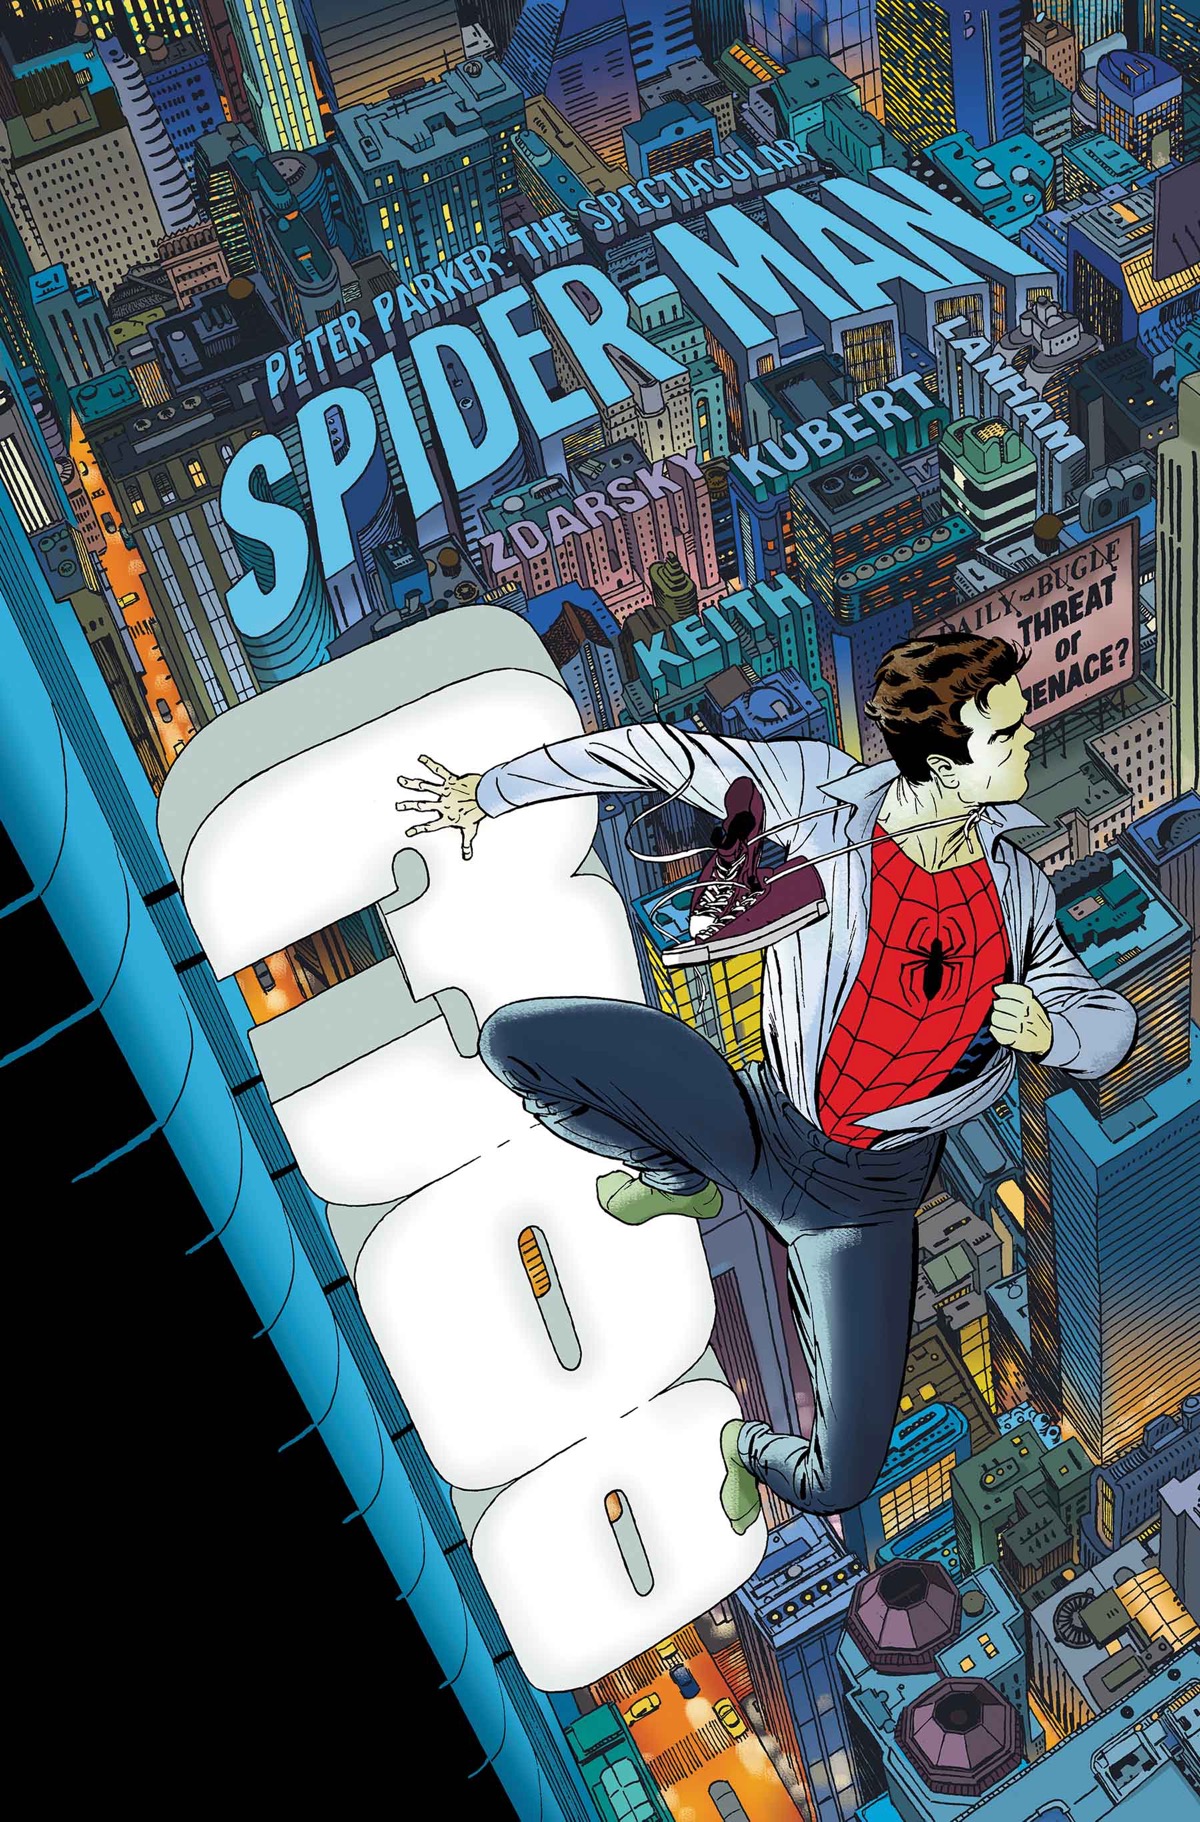 PETER PARKER: THE SPECTACULAR SPIDER-MAN #300